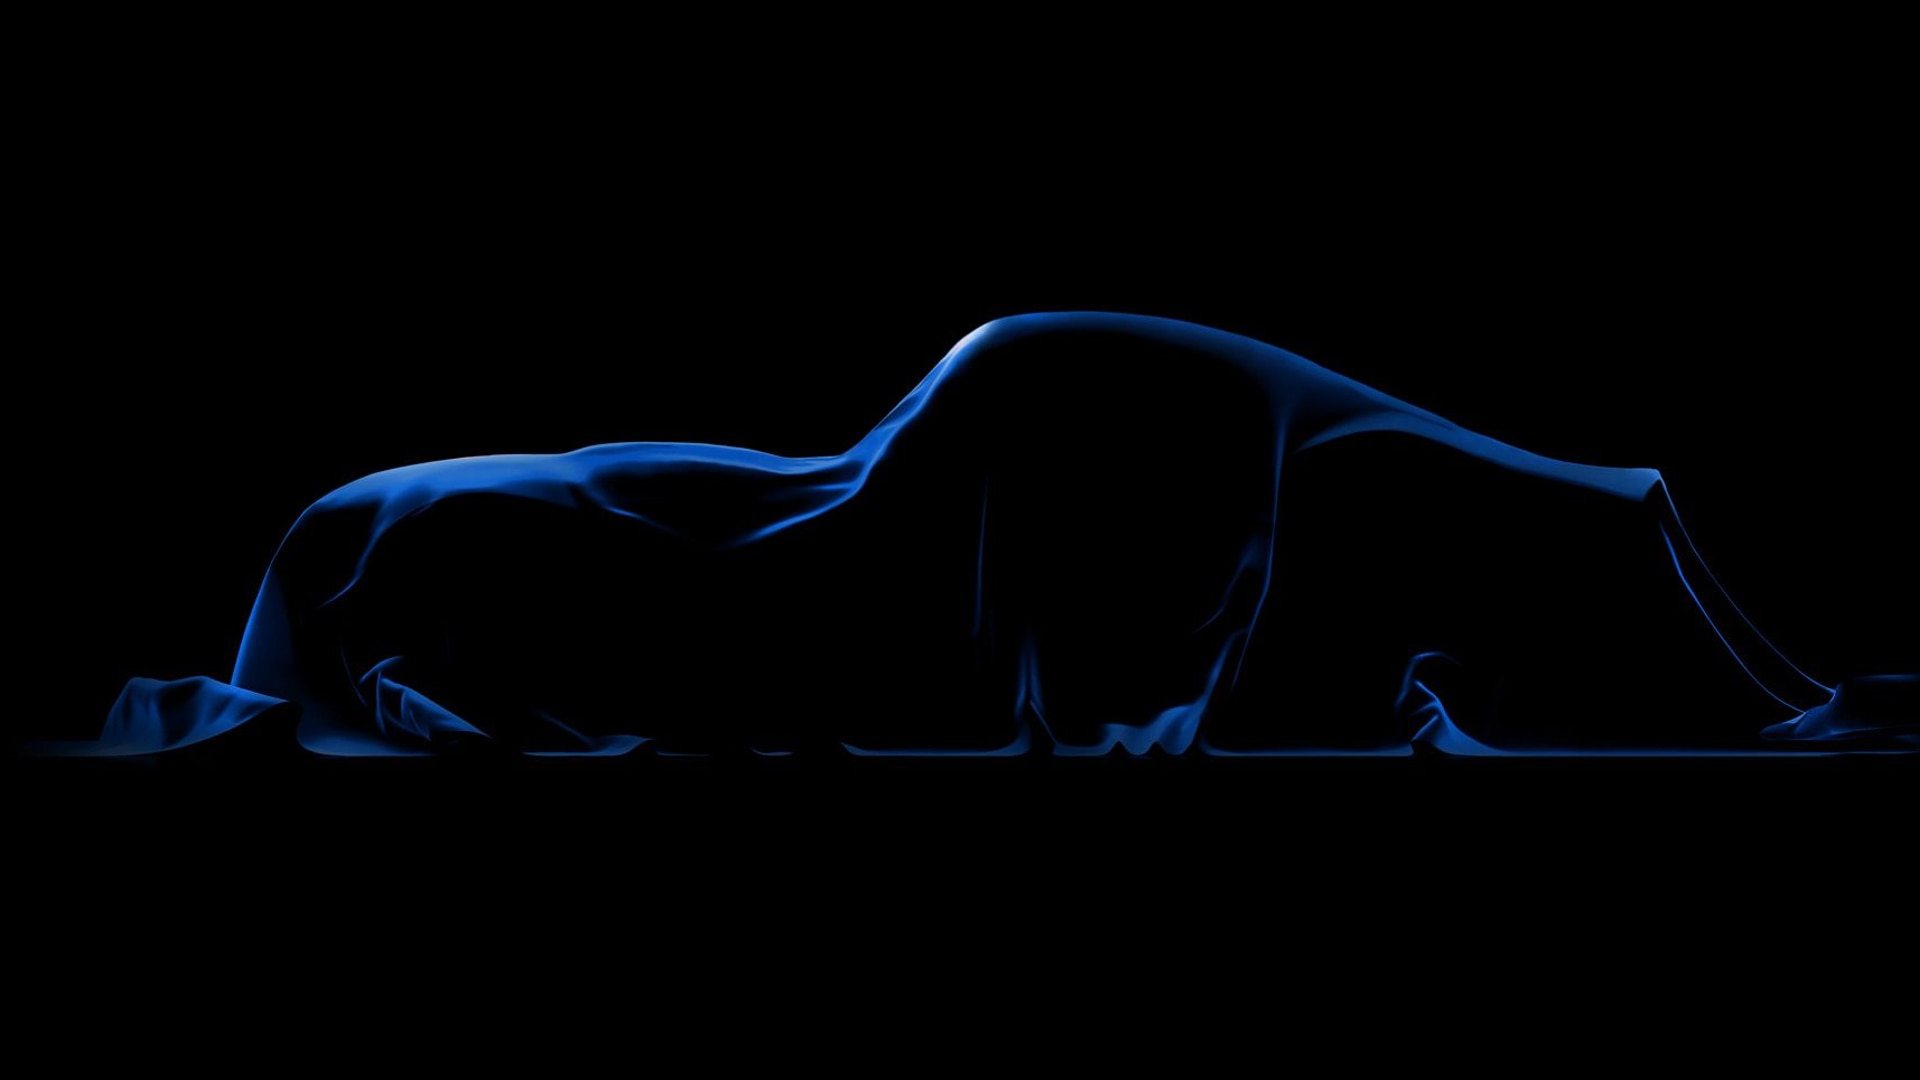 Teaser for AC Cobra GT Coupe due spring 2024